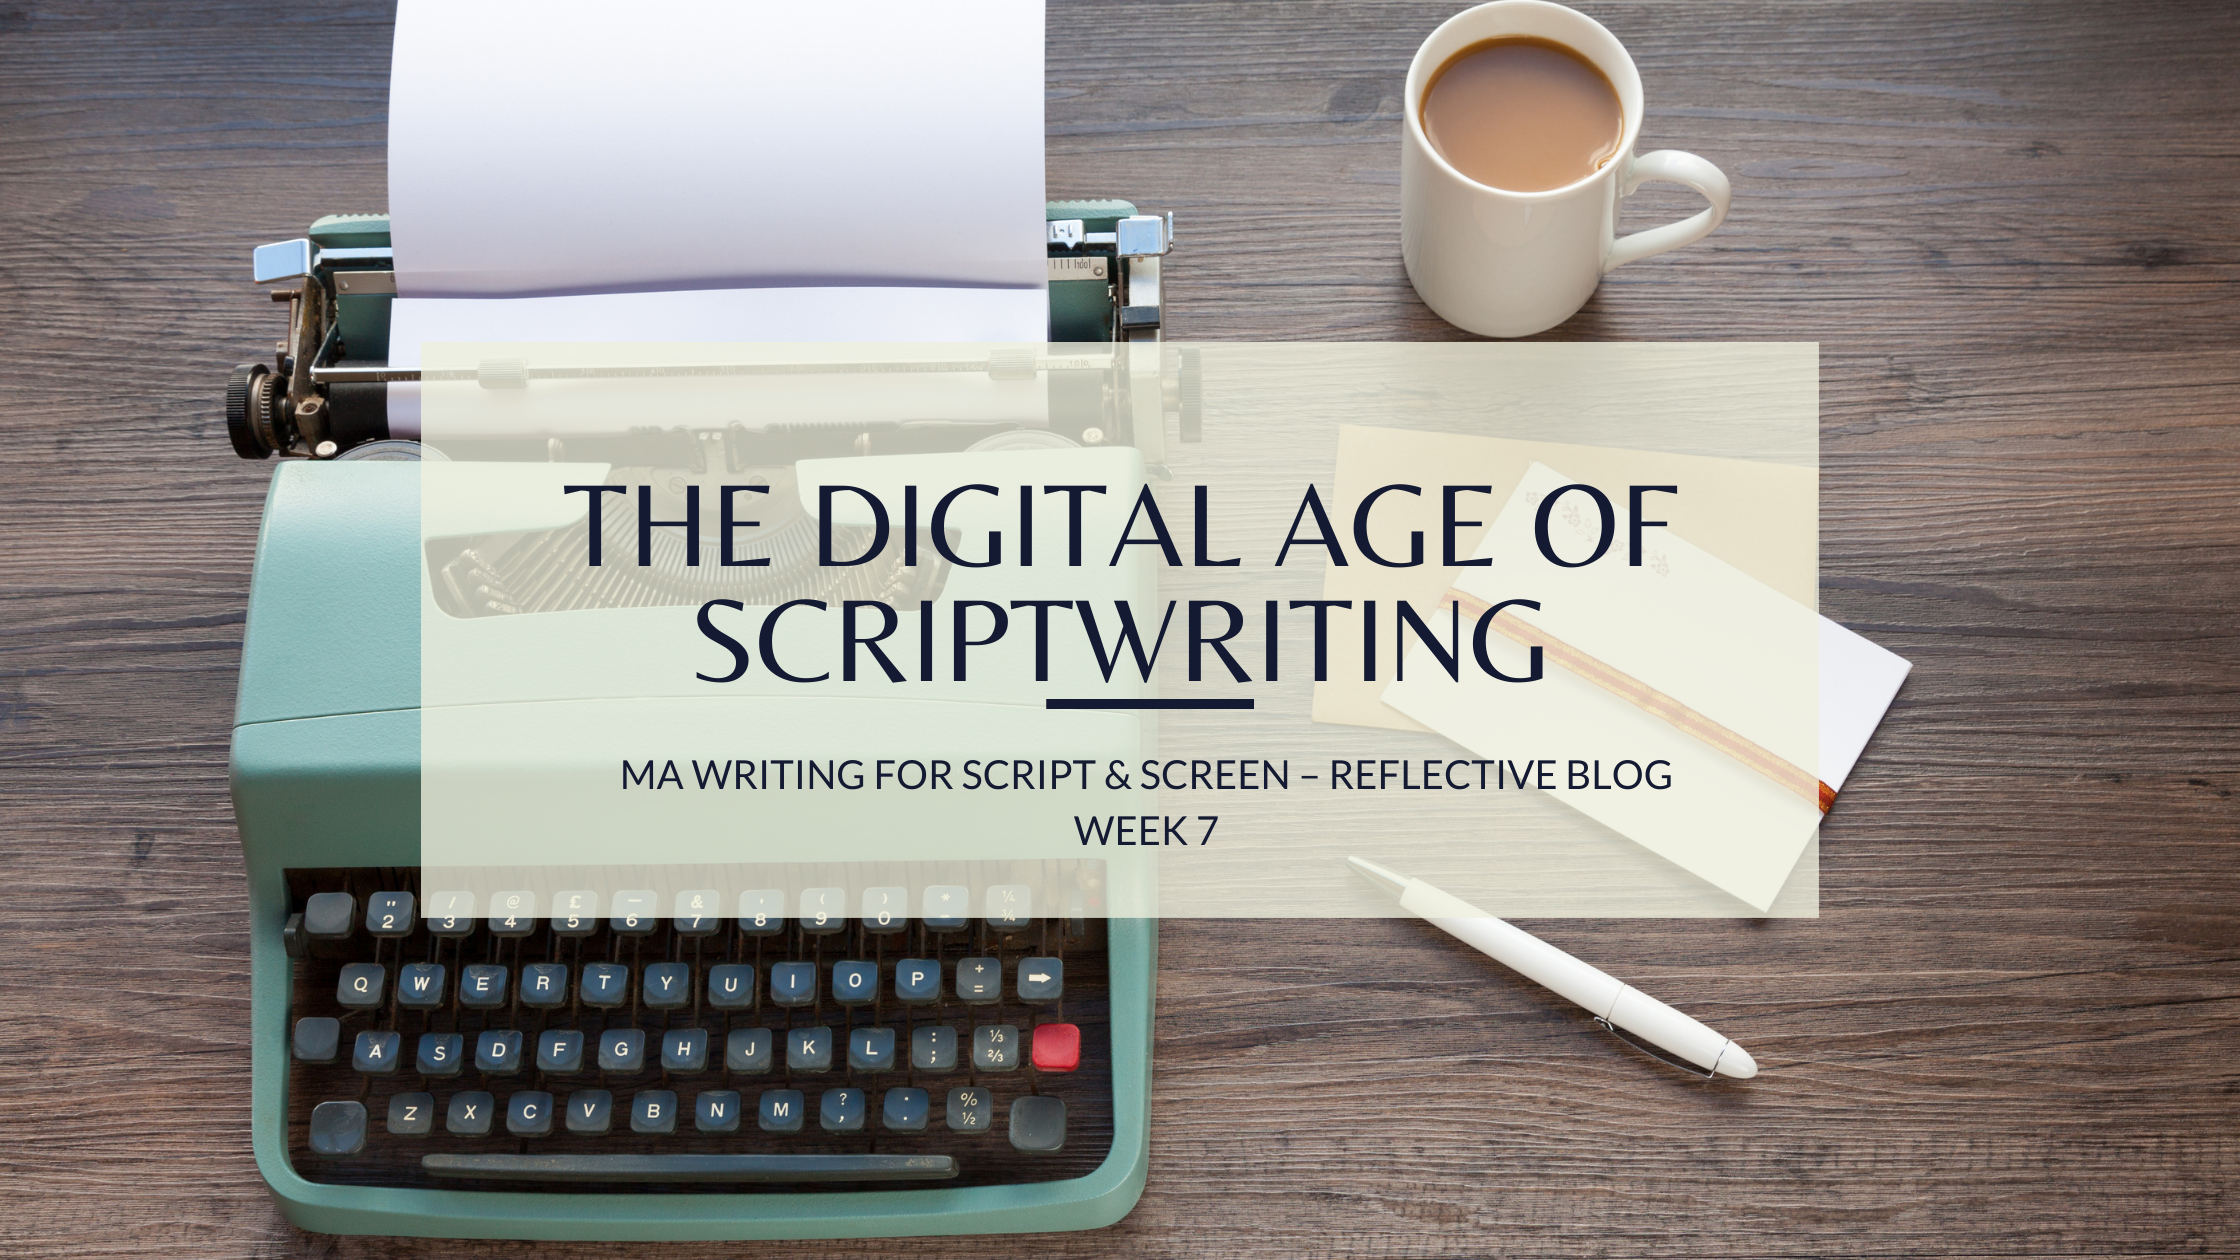 Scriptwriting in the digital age